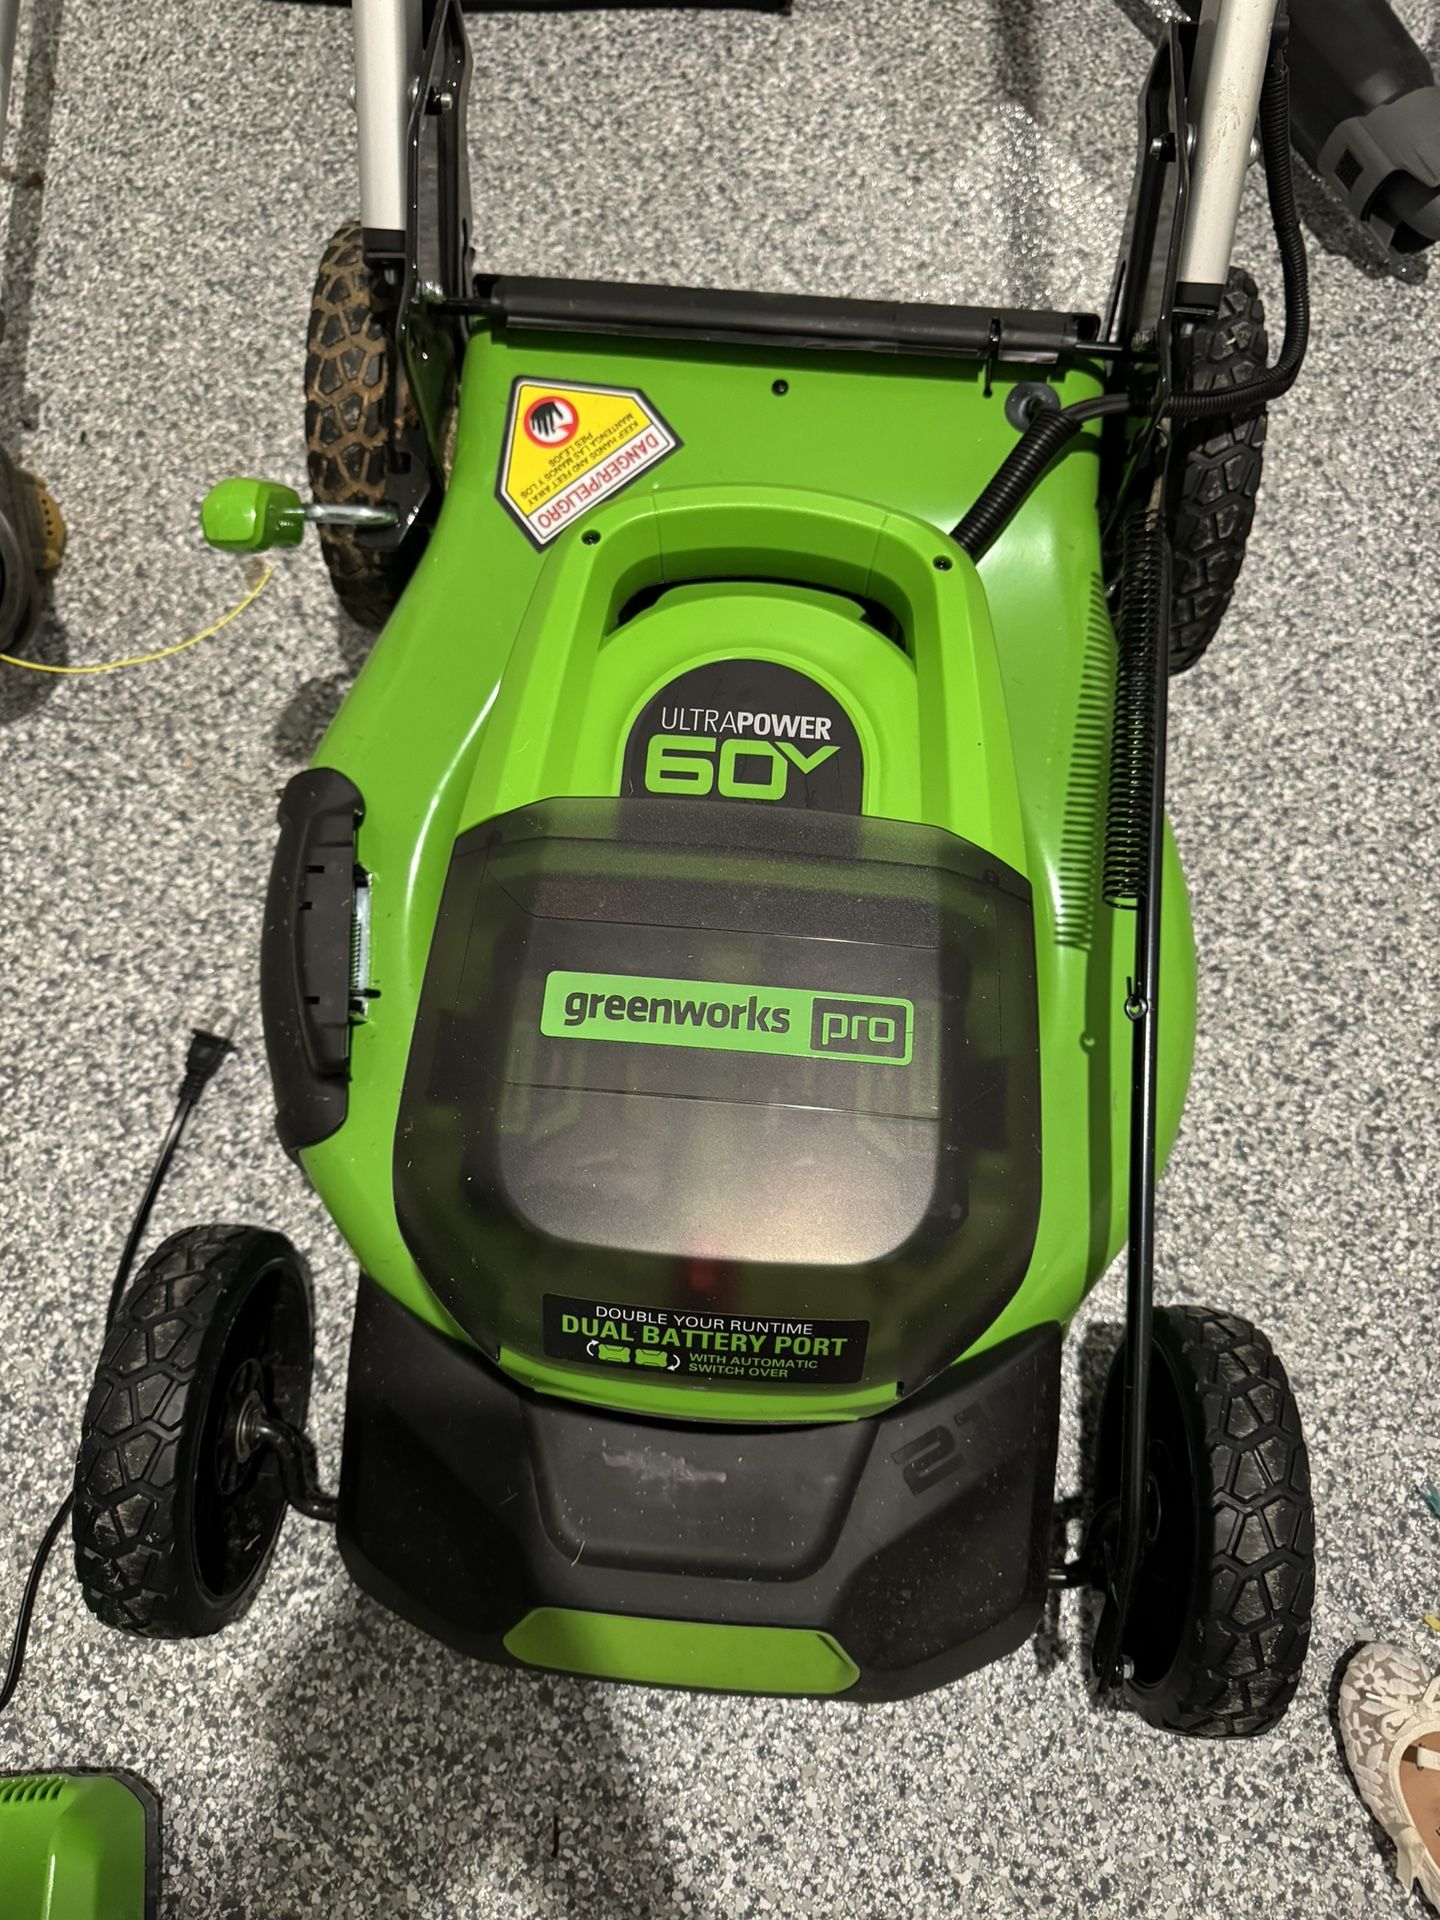 Lawn mower: Greenworks Pro 60v